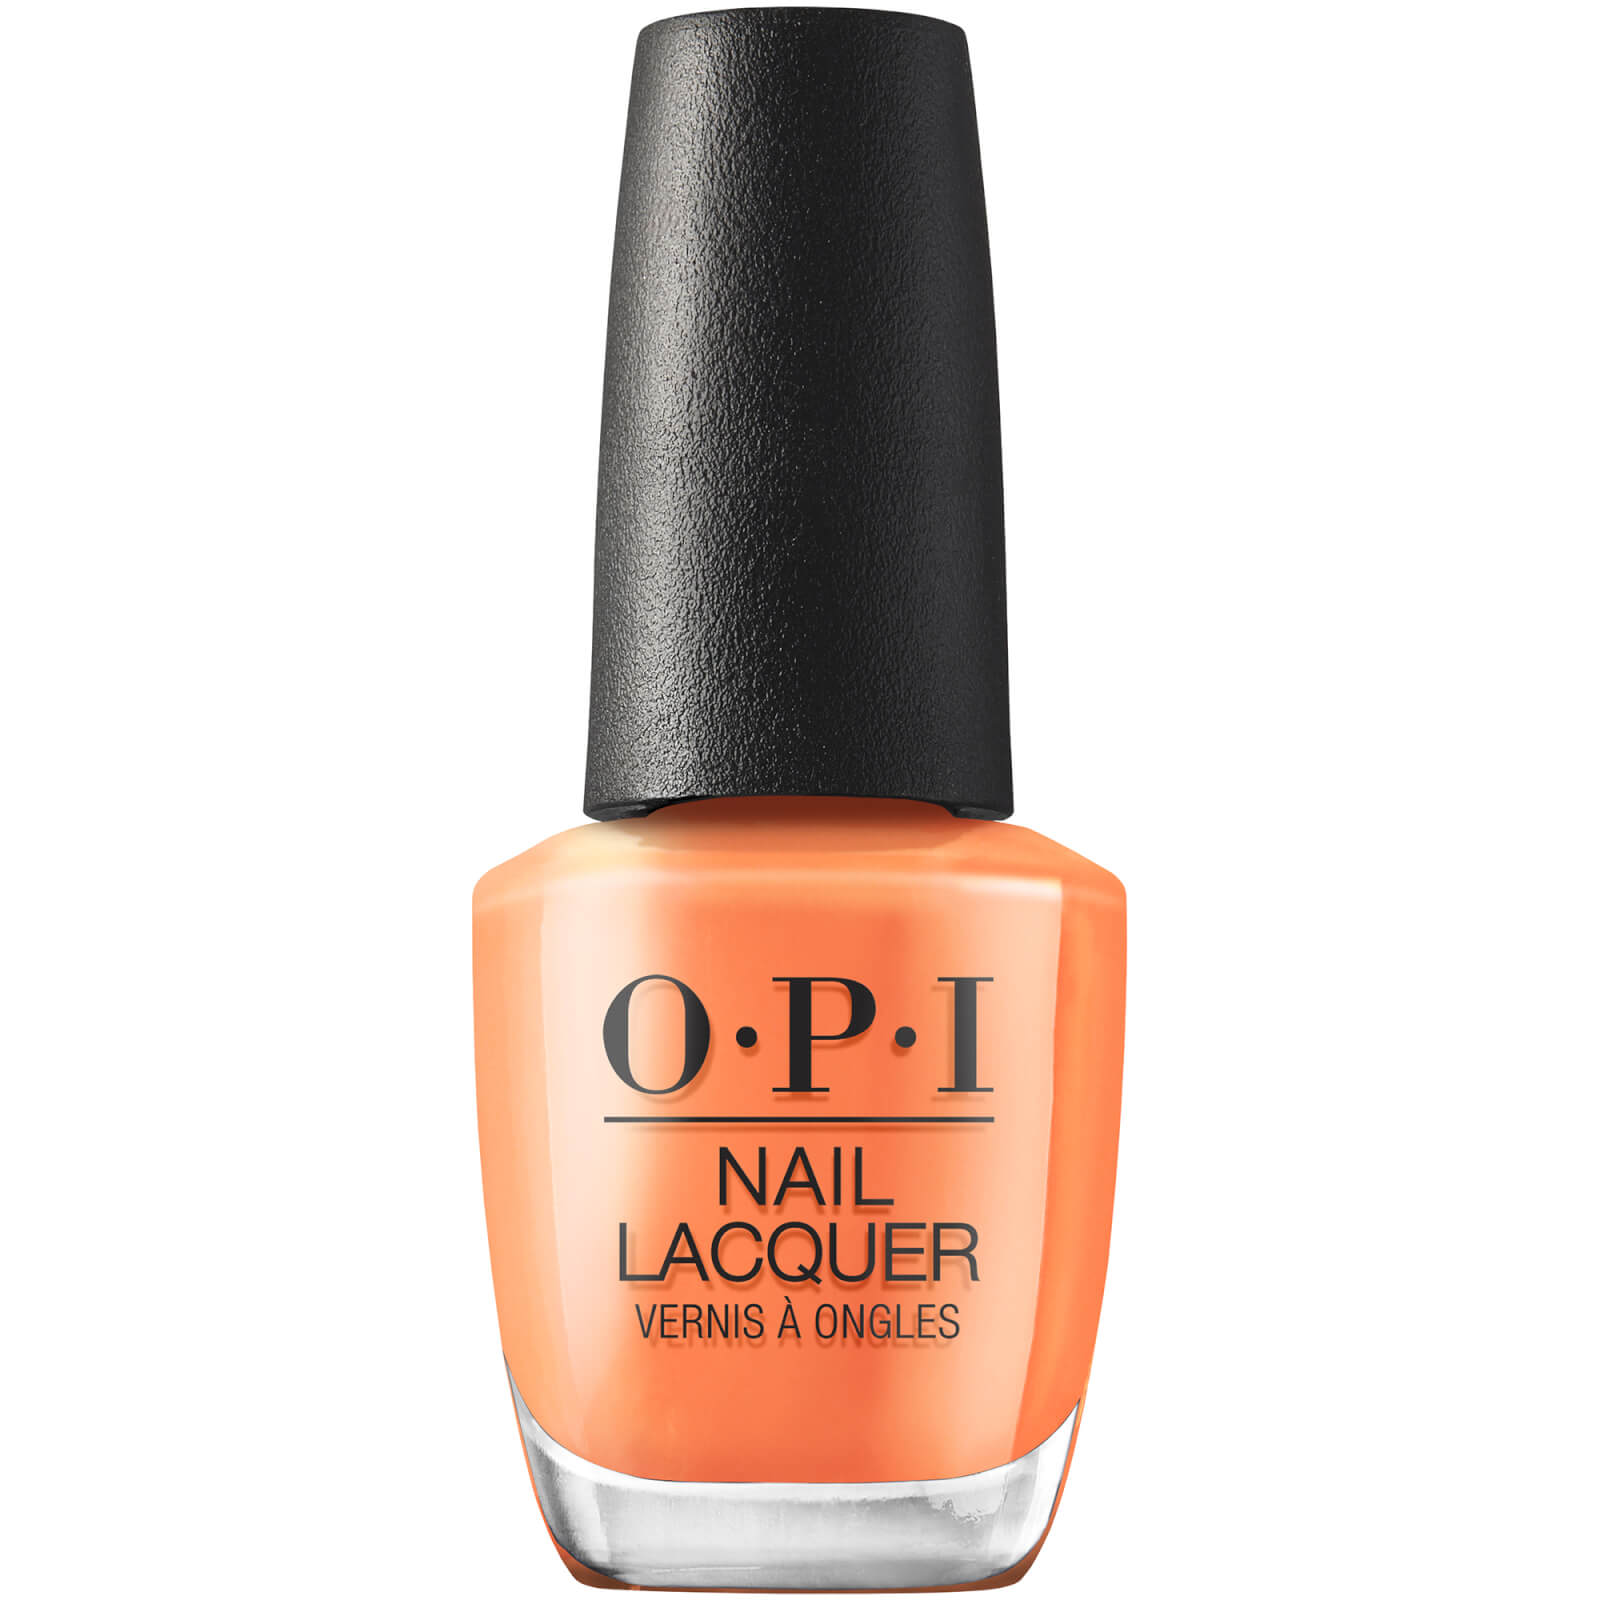 opi nail lacquer spring 23 me, myself and nagellack orange